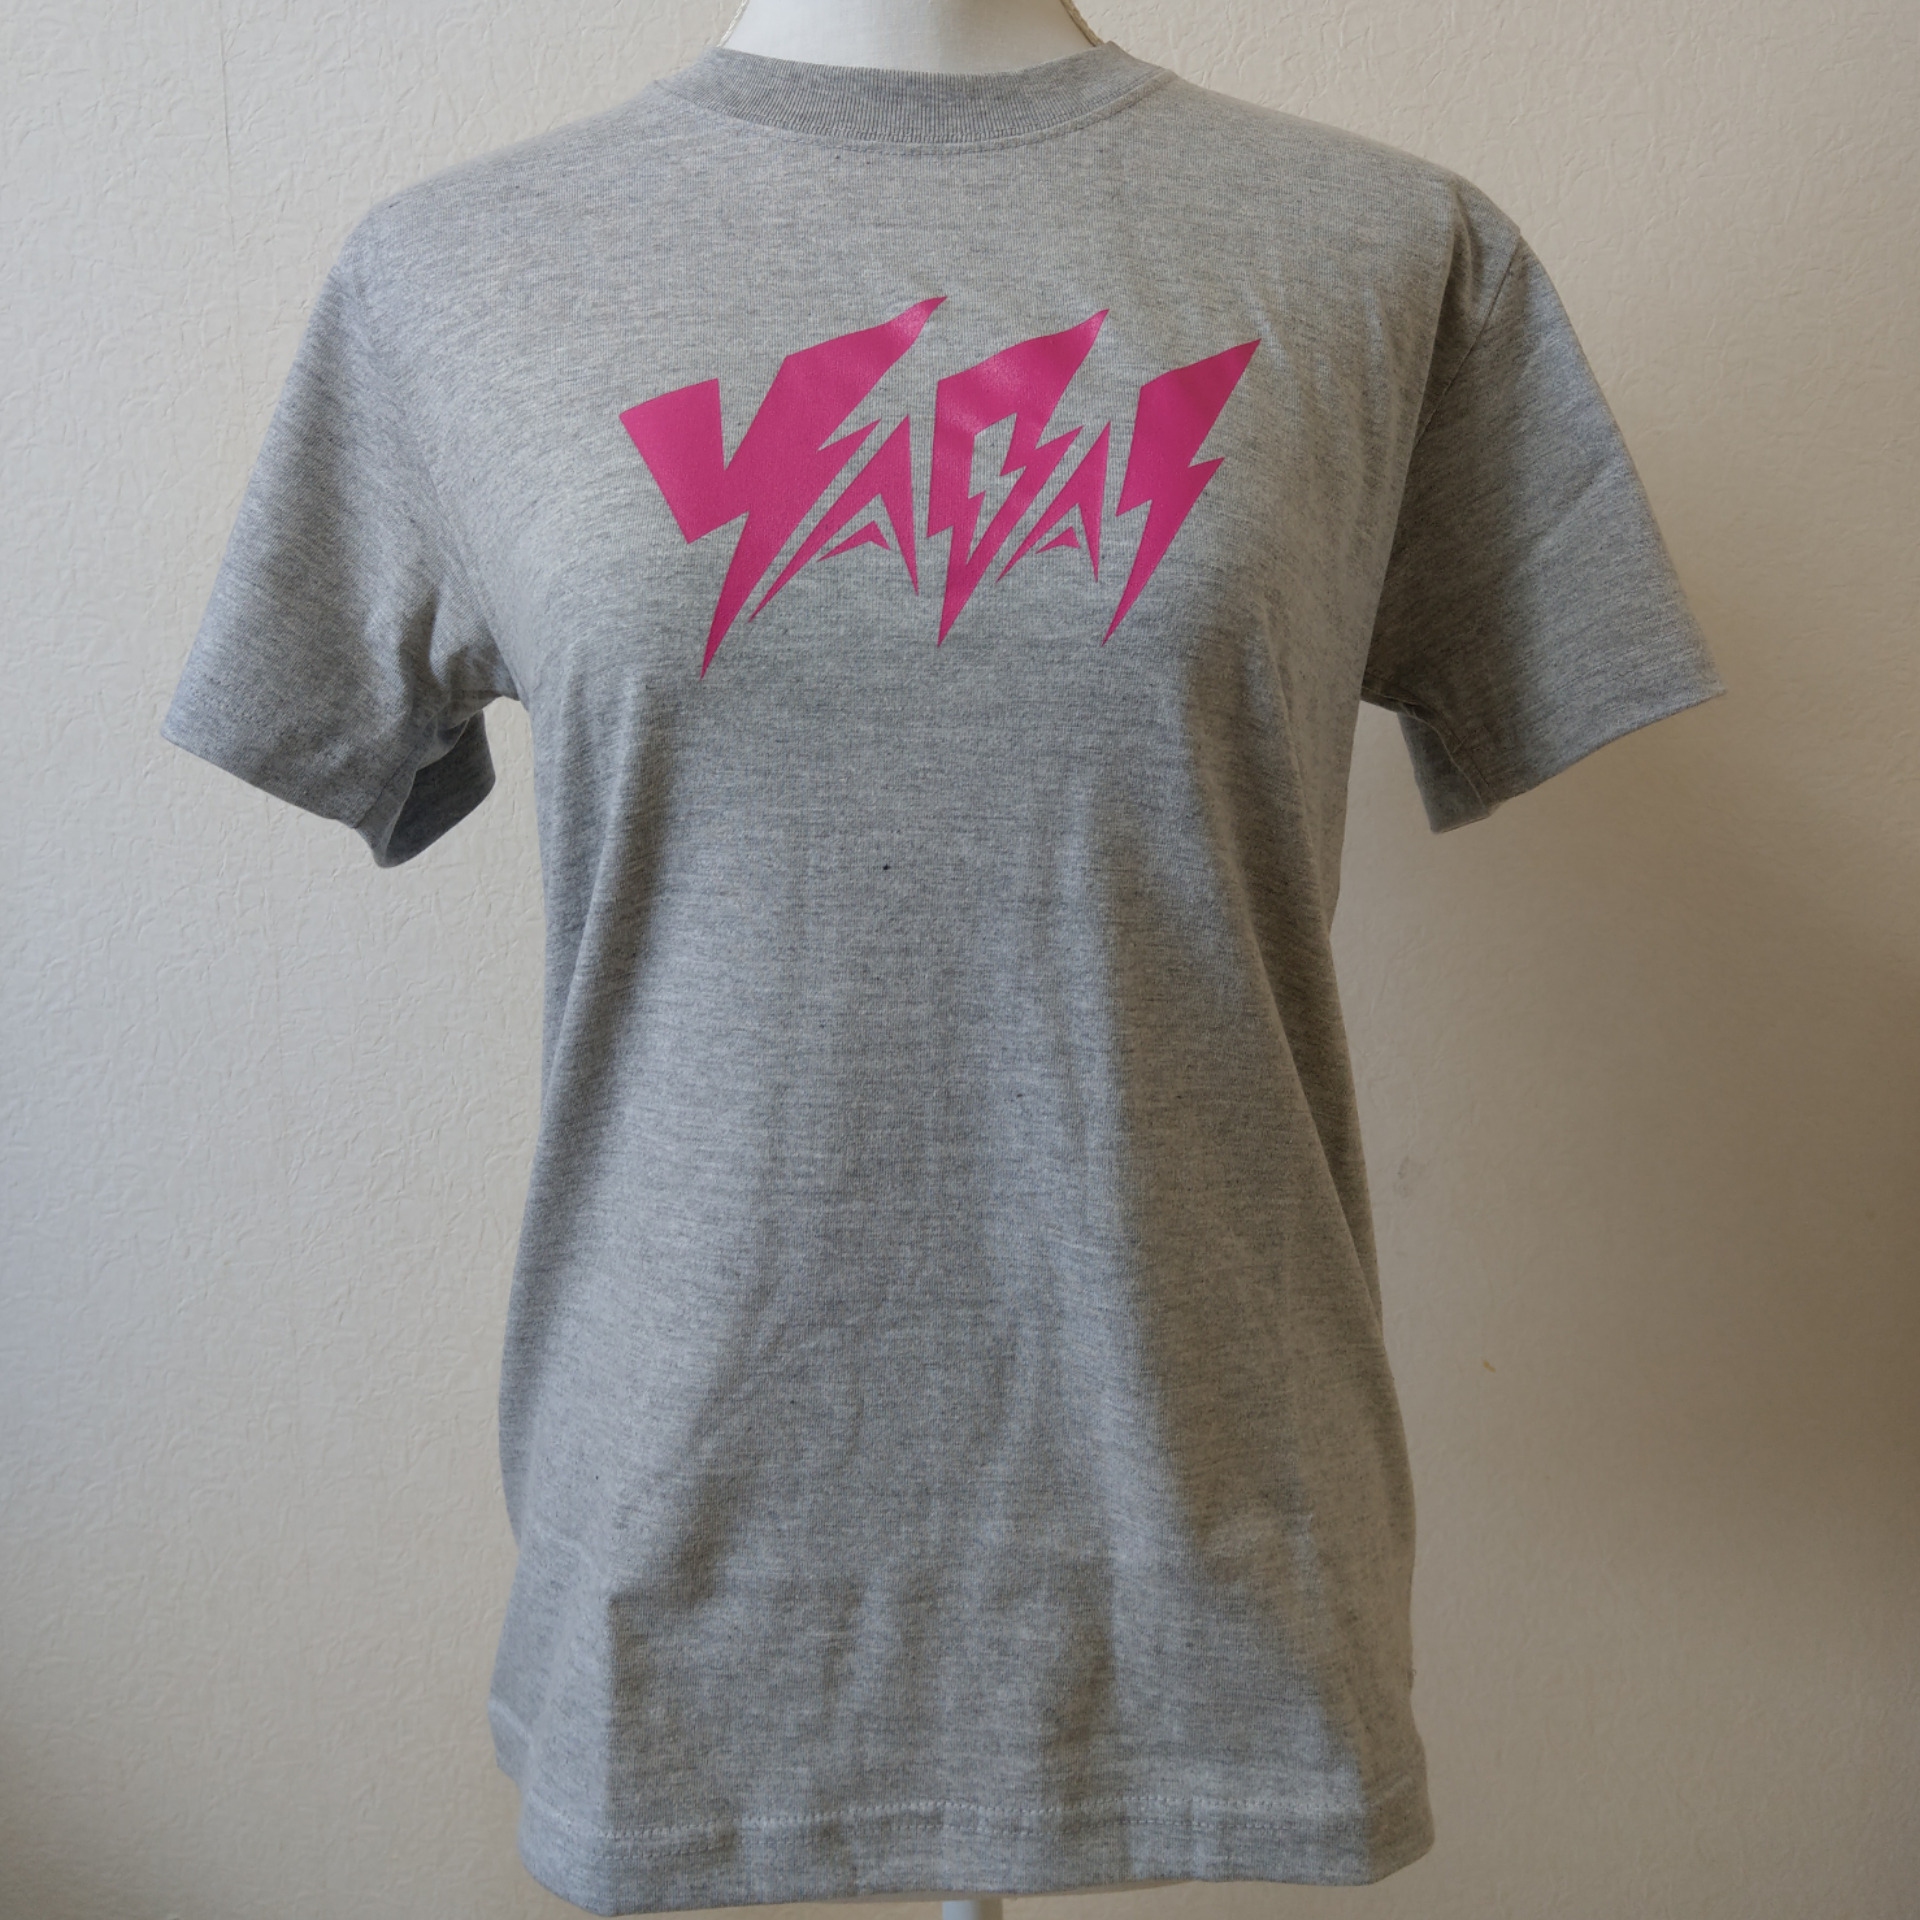 2018 YABAI限定カラーTシャツ販売開始